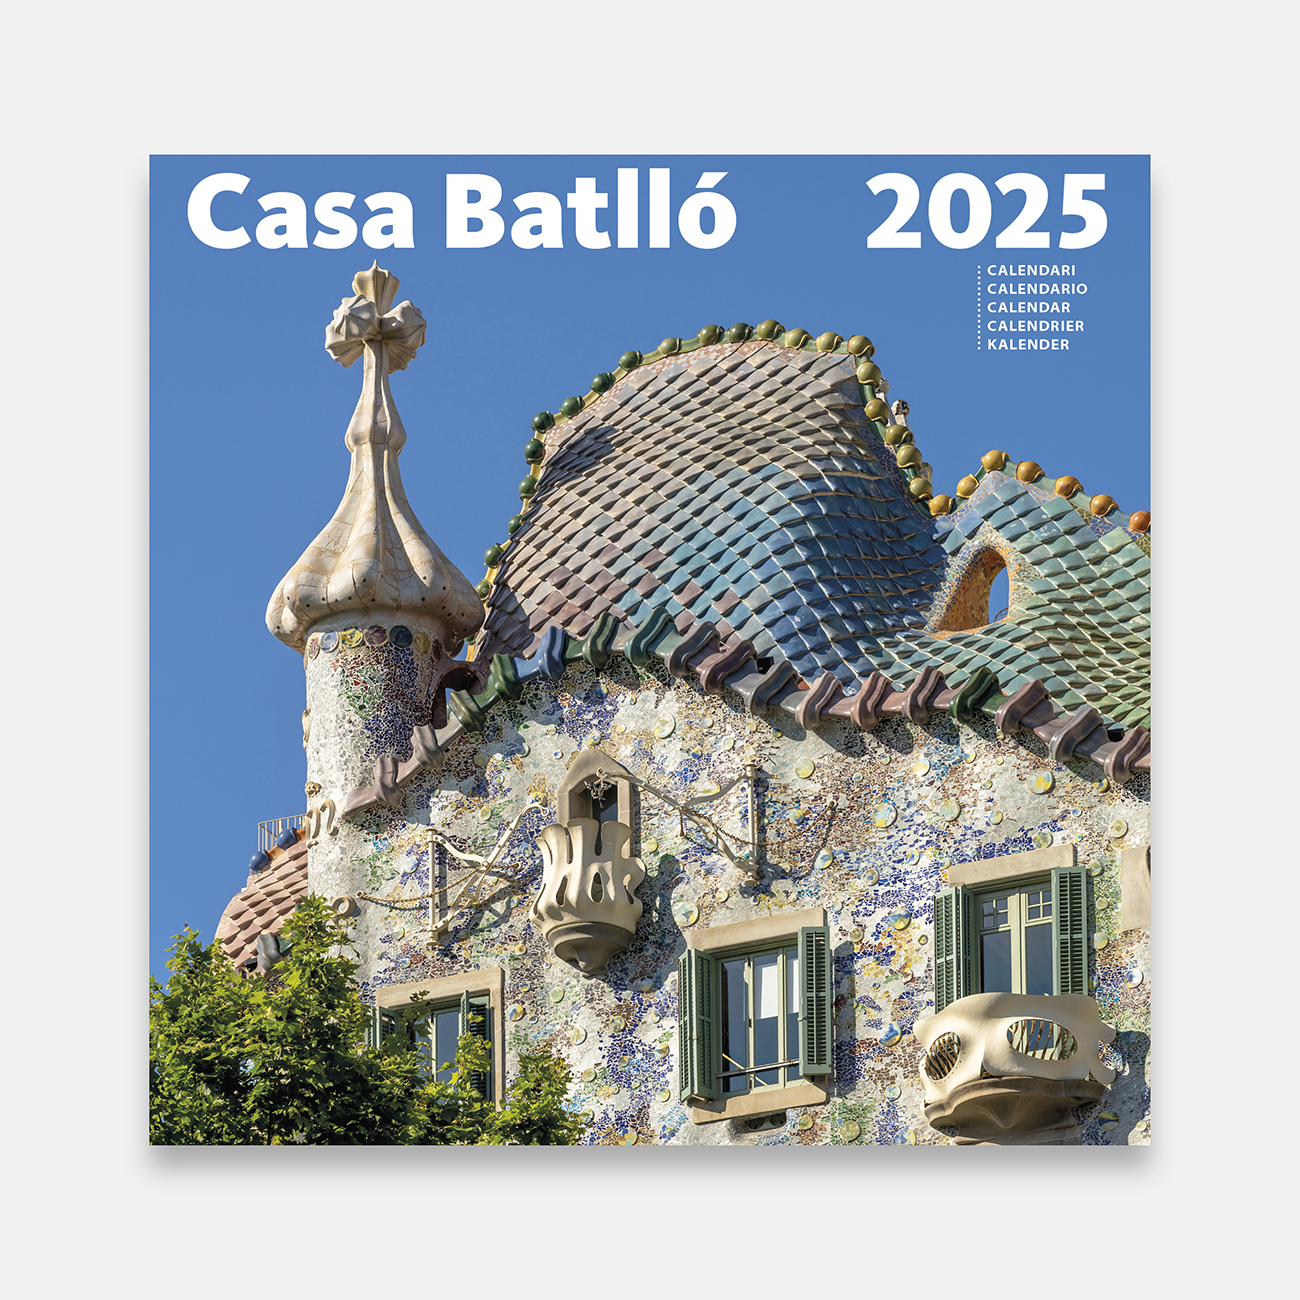 Calendrier 2025 Casa Batlló 25cb calendario pared 2025 gaudi casa batllo